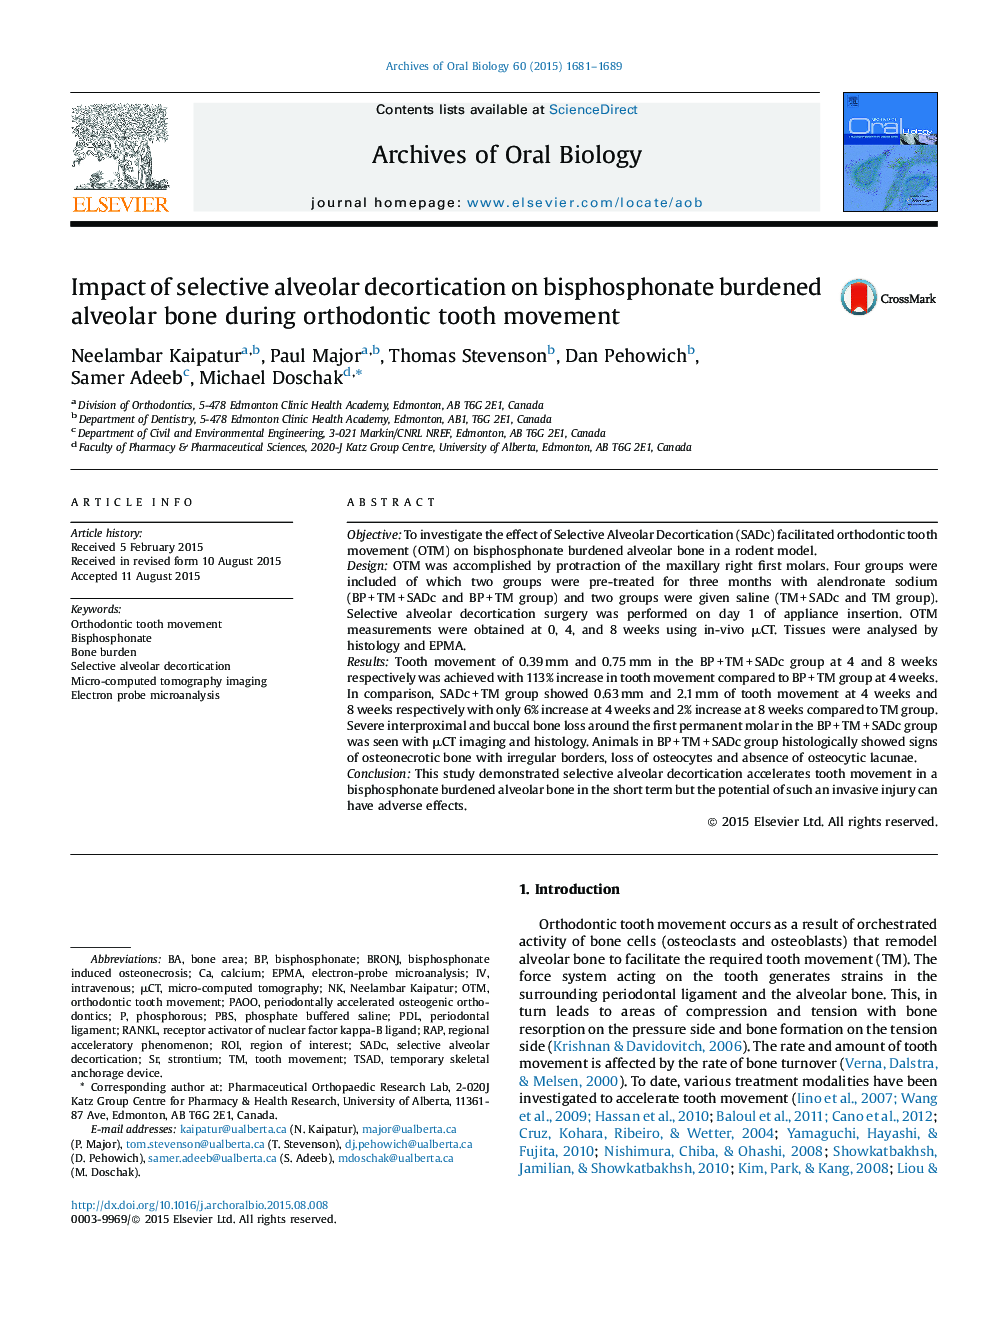 Impact of selective alveolar decortication on bisphosphonate burdened alveolar bone during orthodontic tooth movement